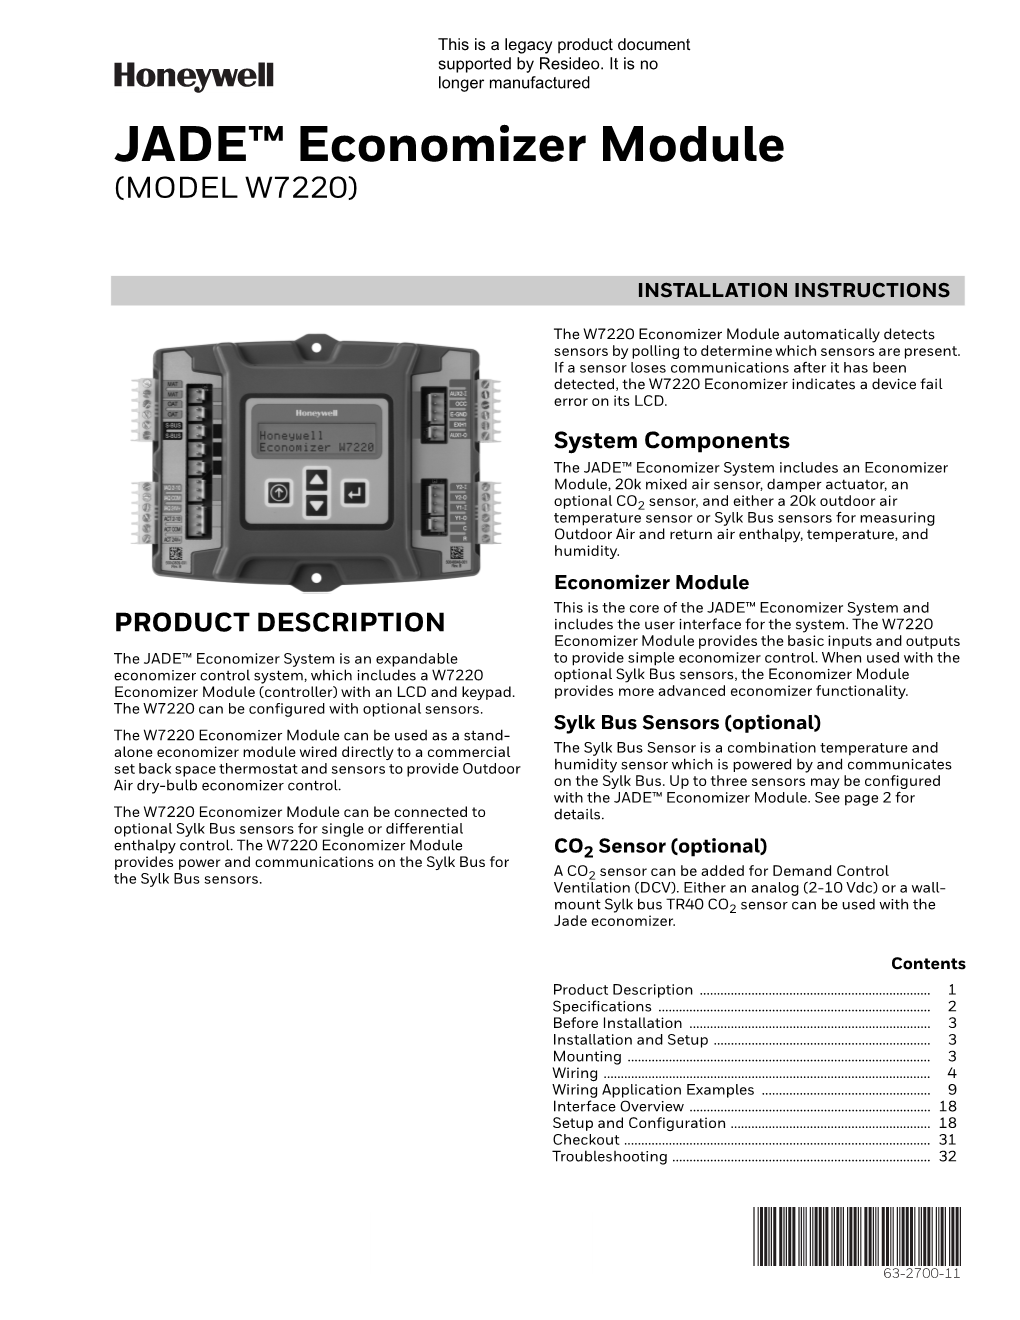 JADE™ Economizer Module (MODEL W7220)